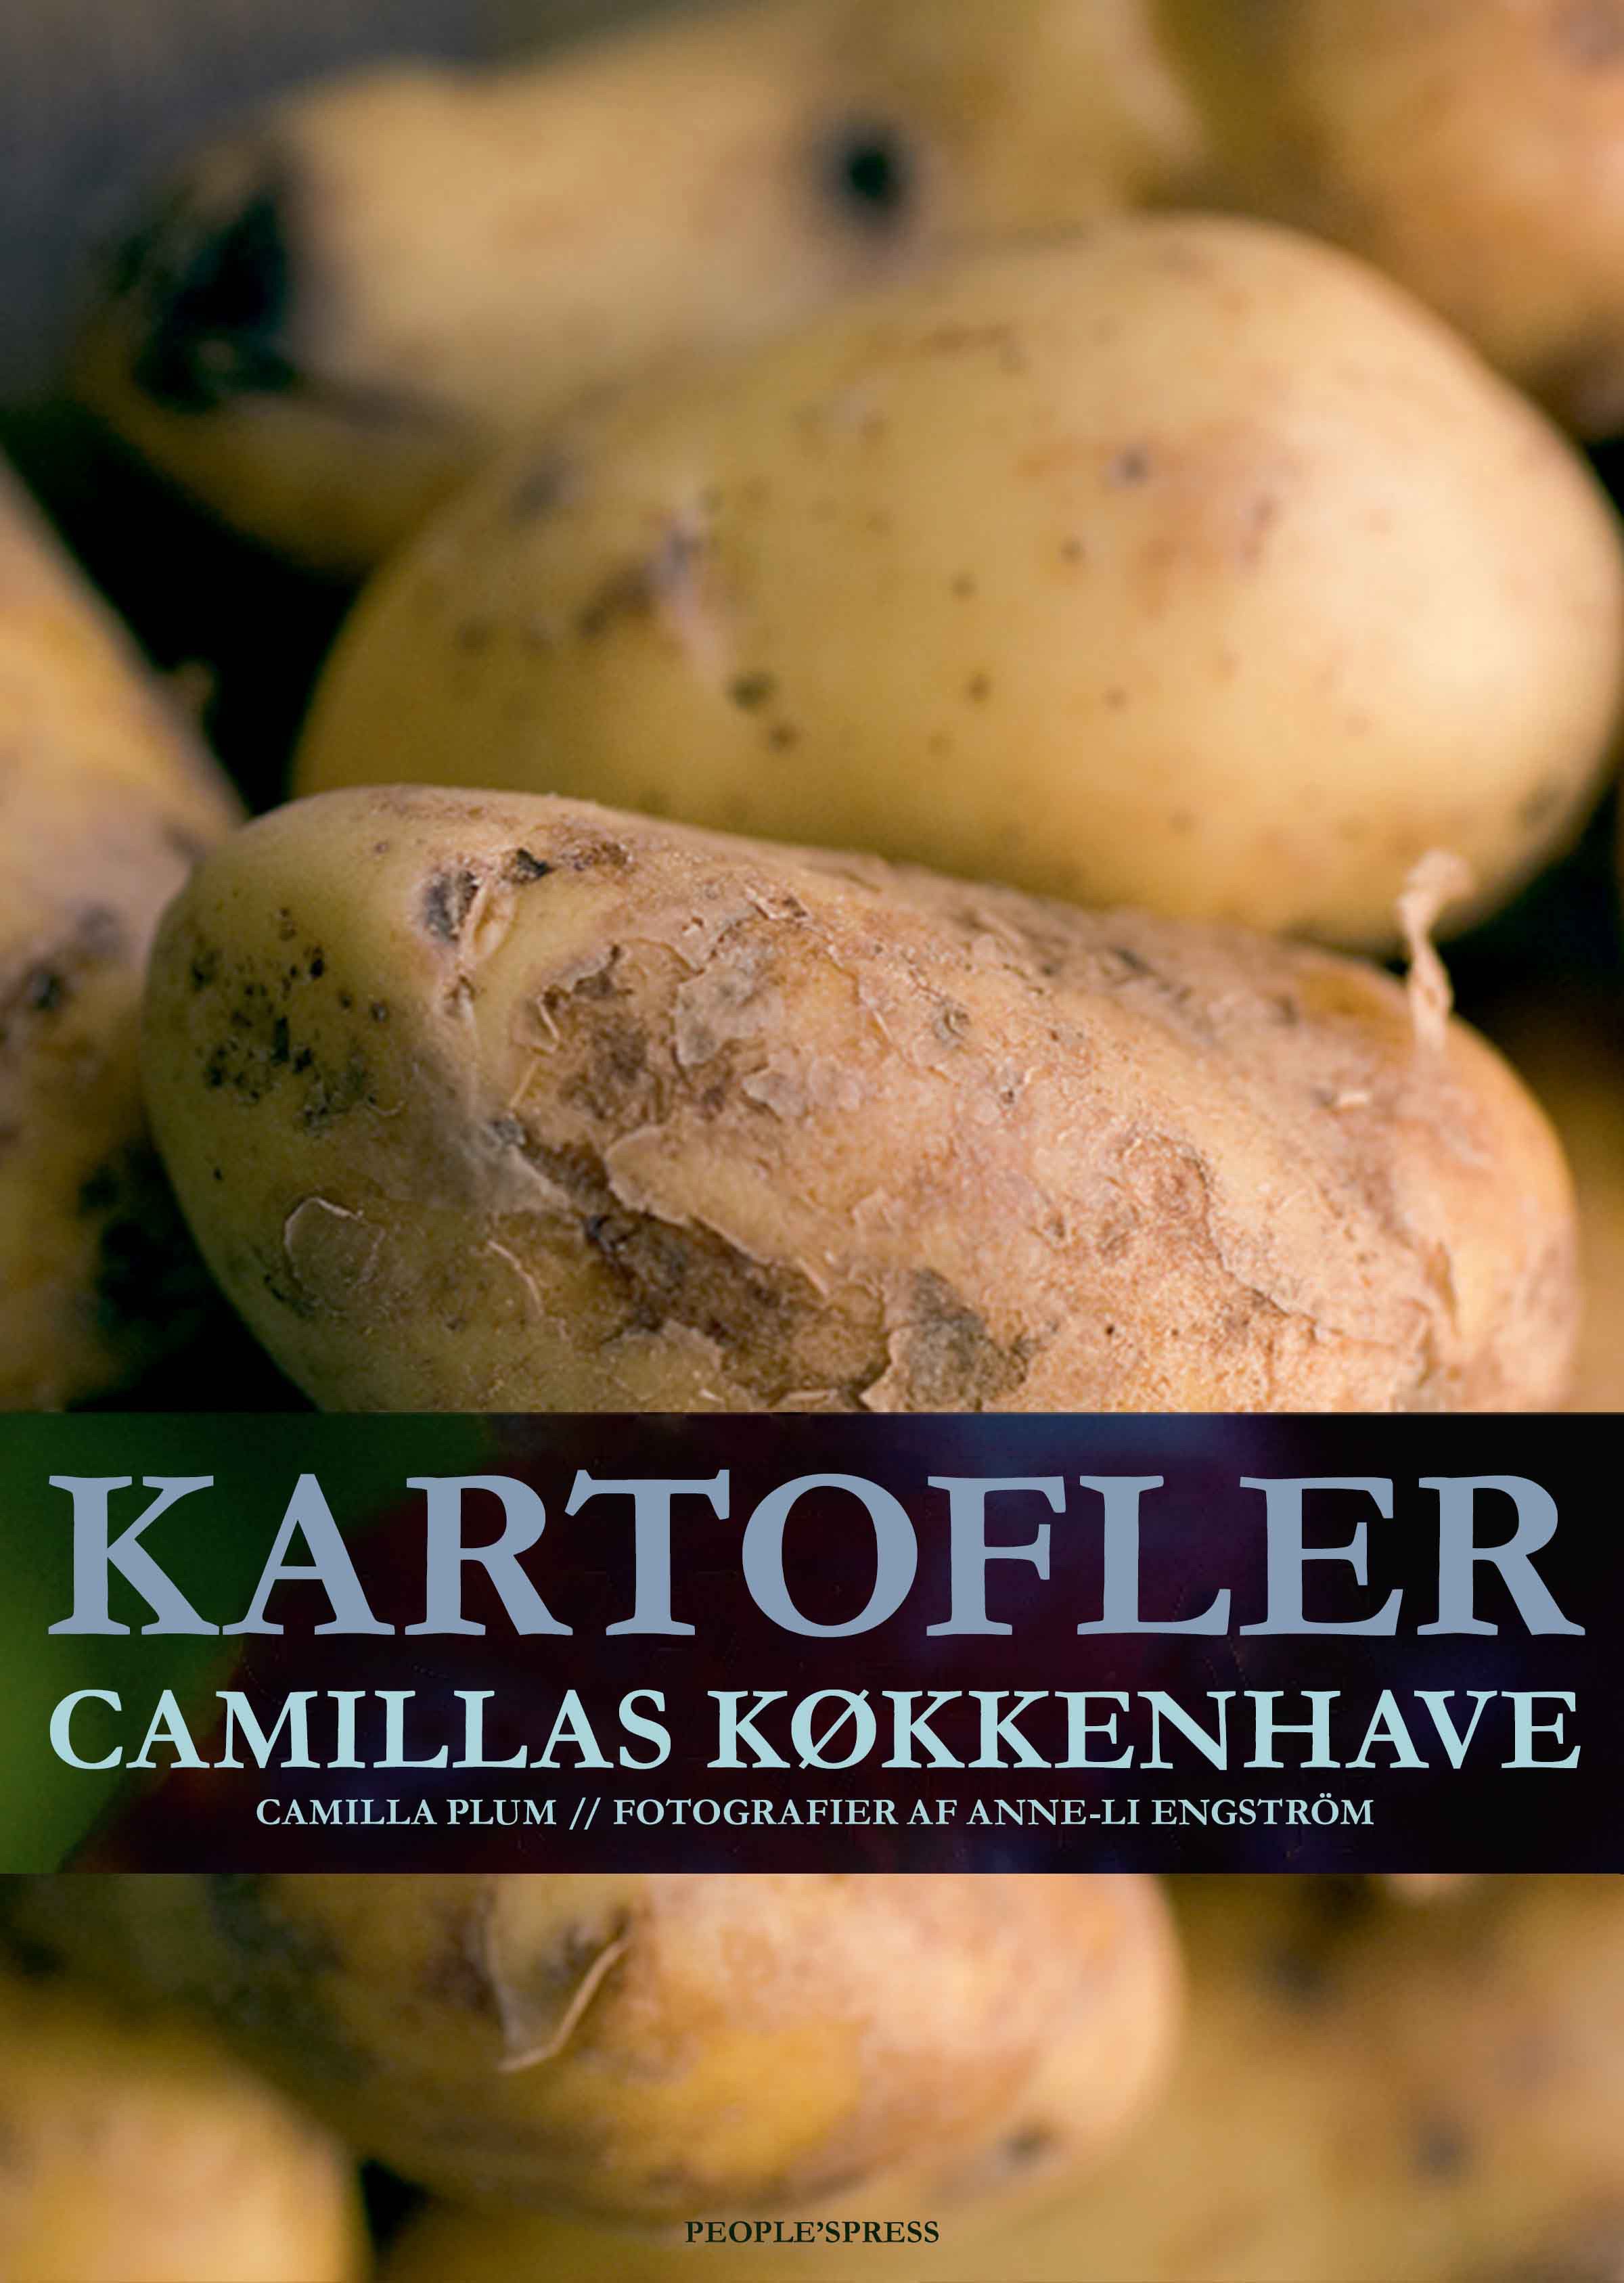 Kartofler - Camillas køkkenhave, e-bog af Camilla Plum